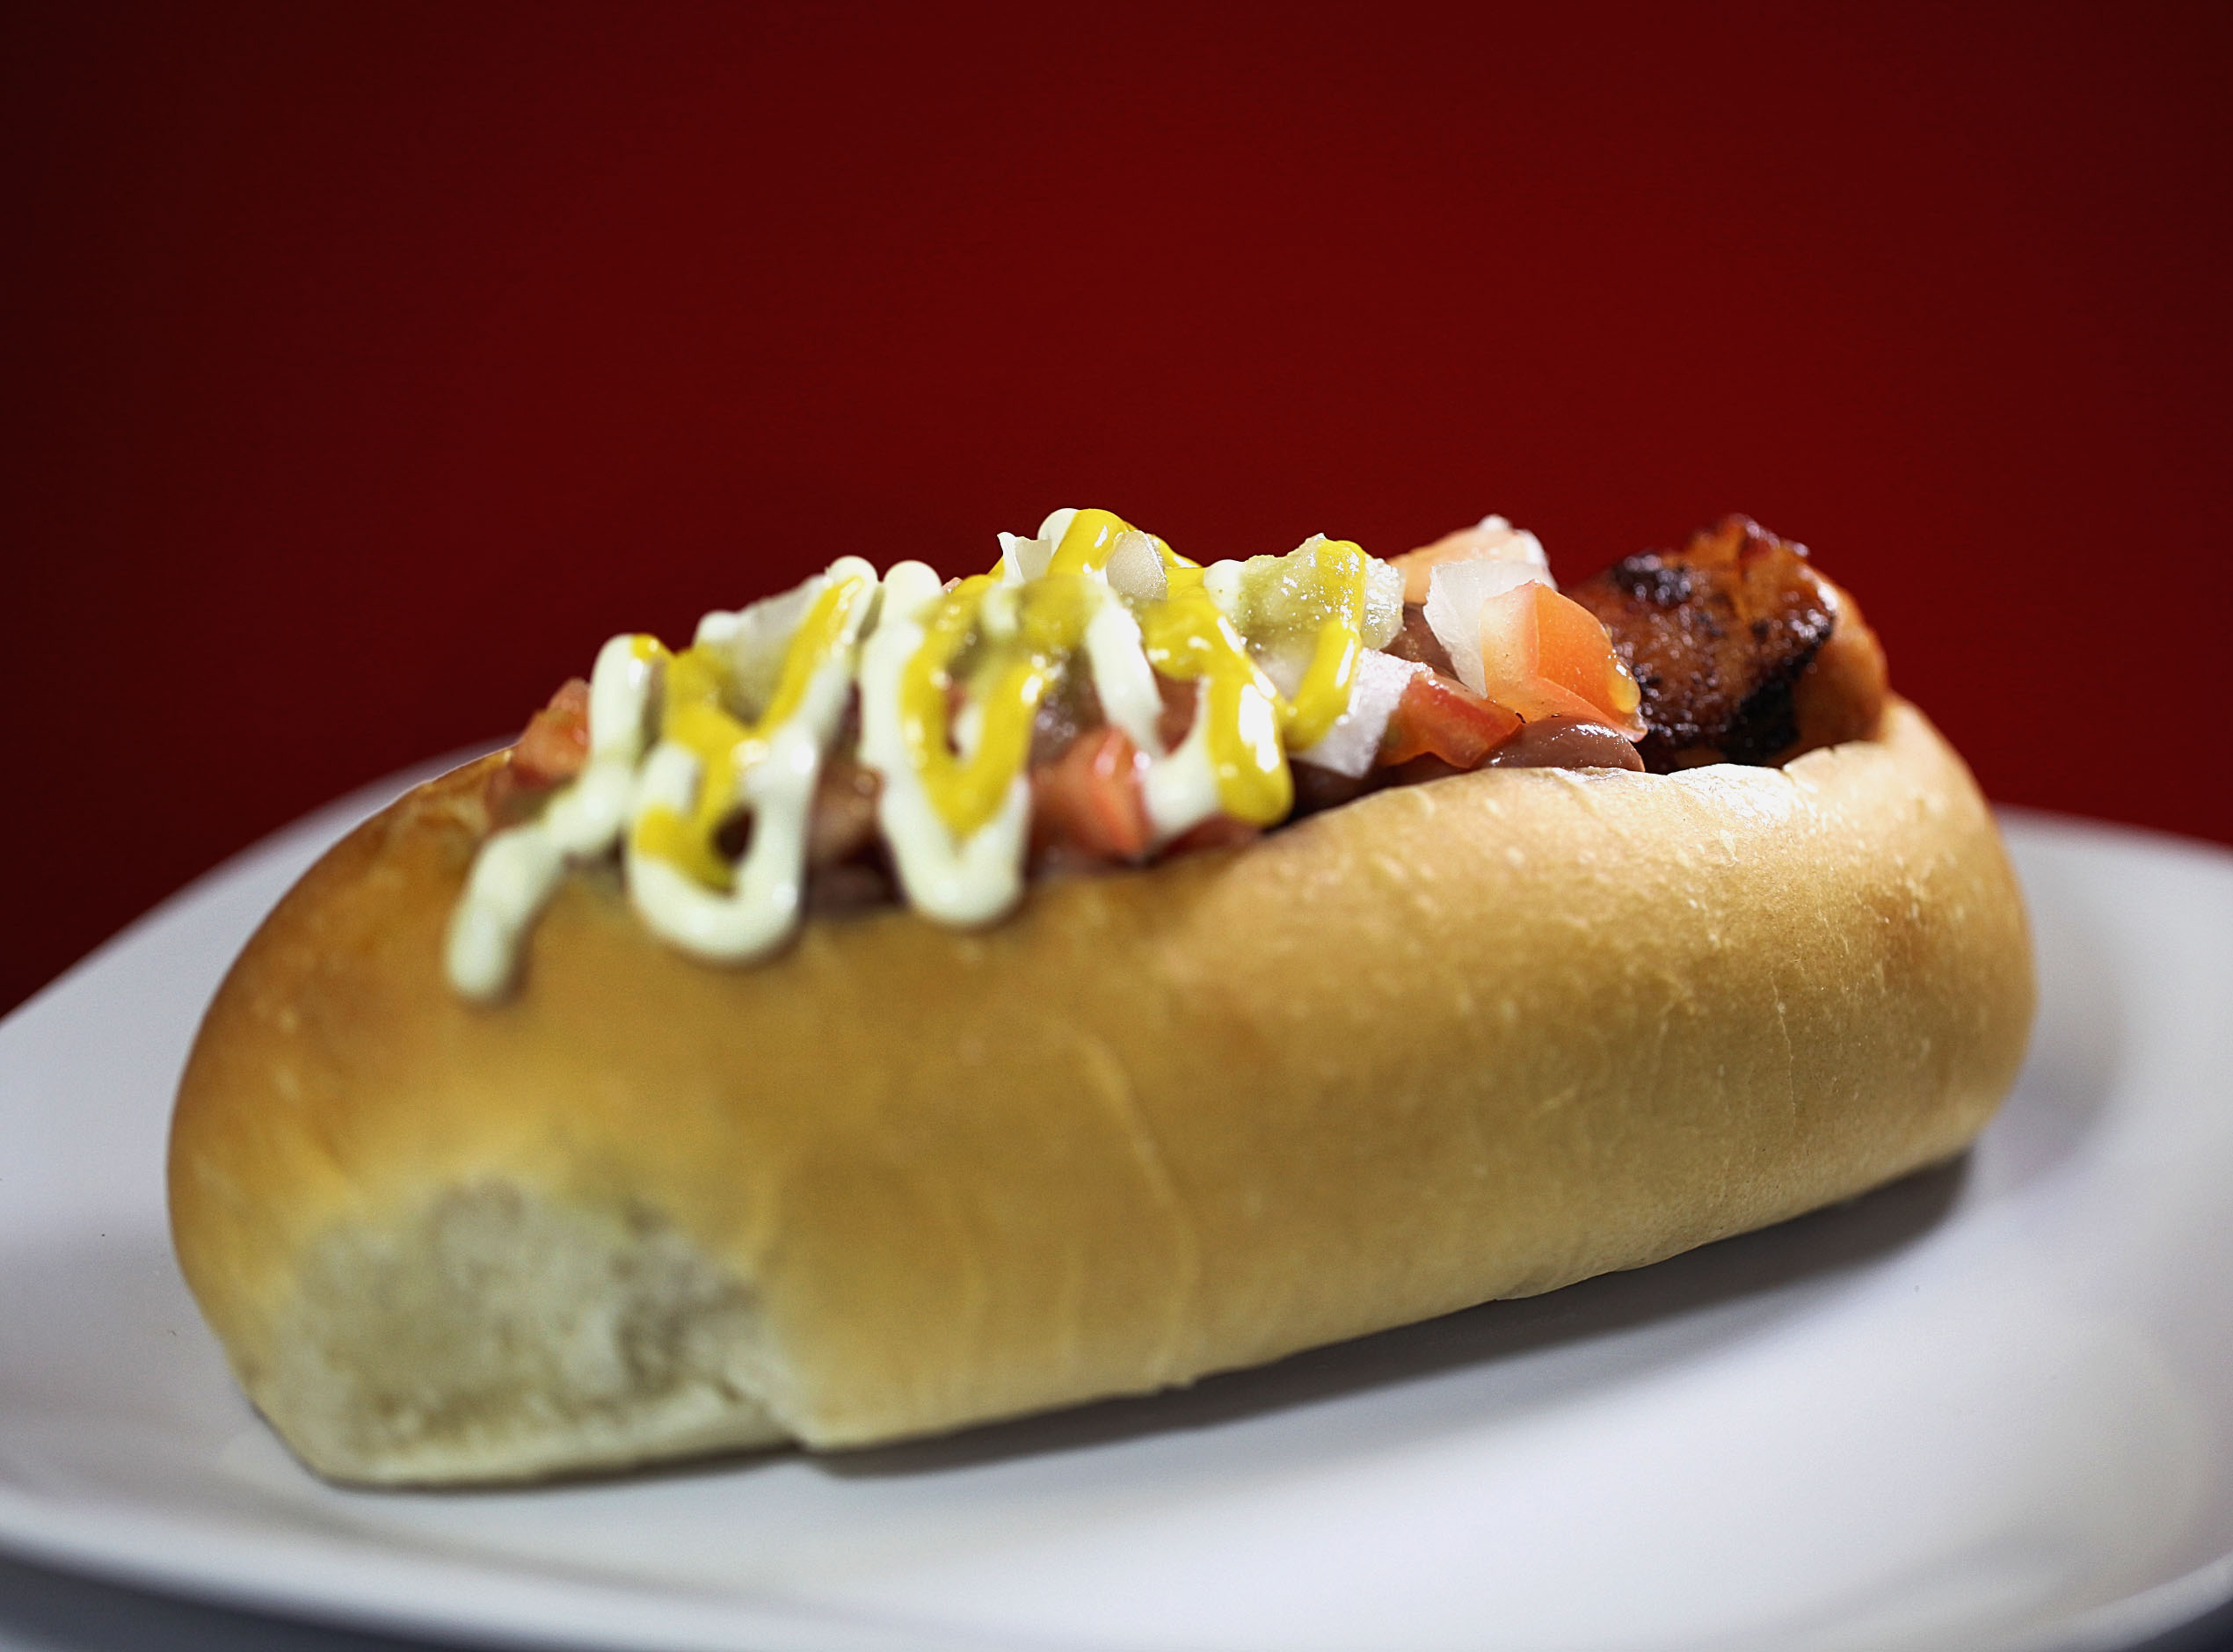 This $3.50 Hot Dog Just Won a James Beard Award